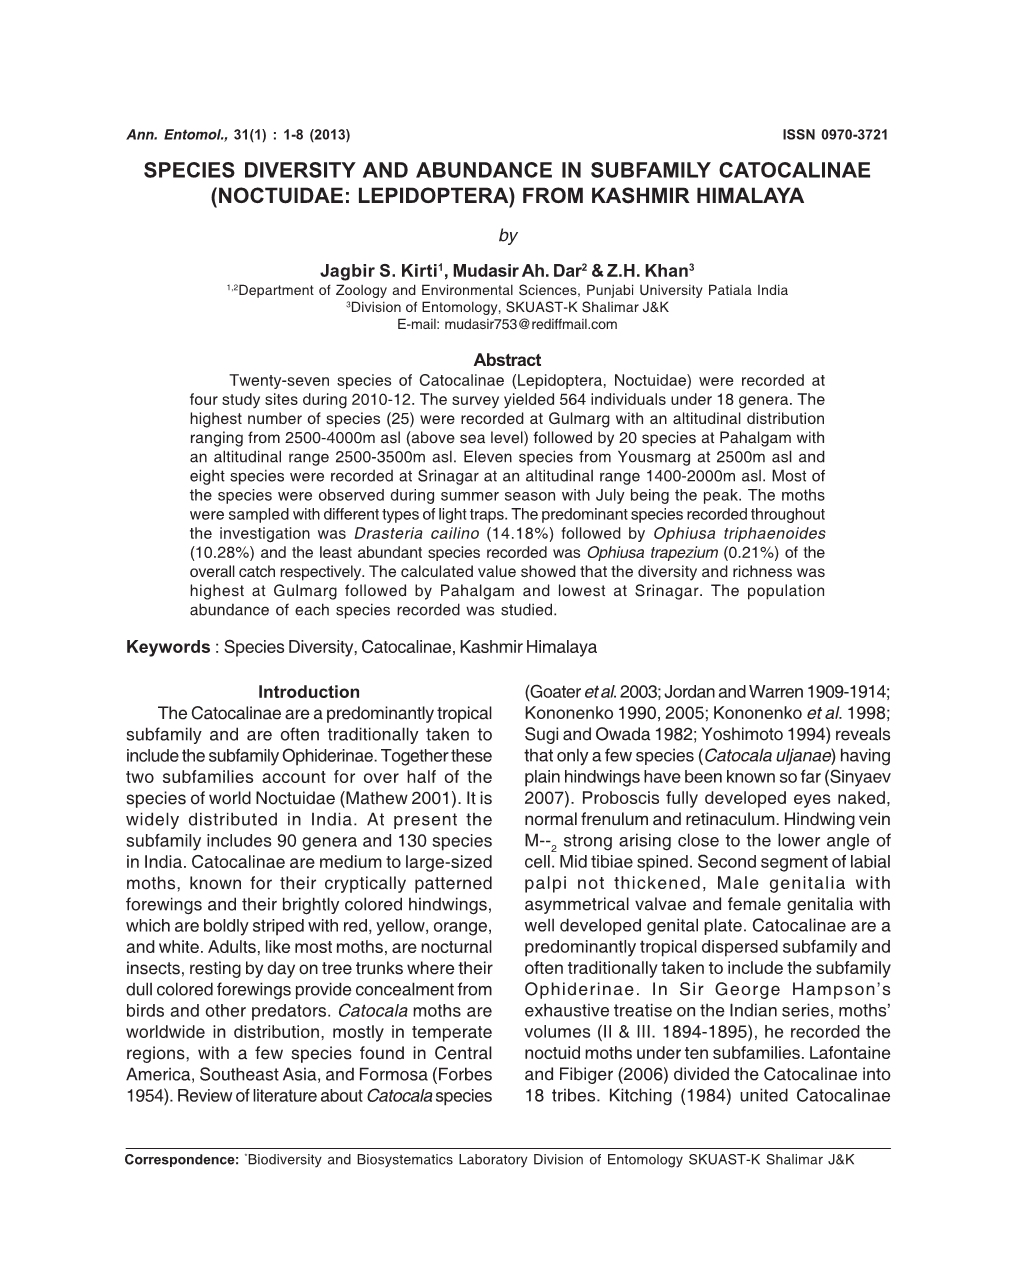 Species Diversity and Abundance in Subfamily Catocalinae (Noctuidae: Lepidoptera) from Kashmir Himalaya